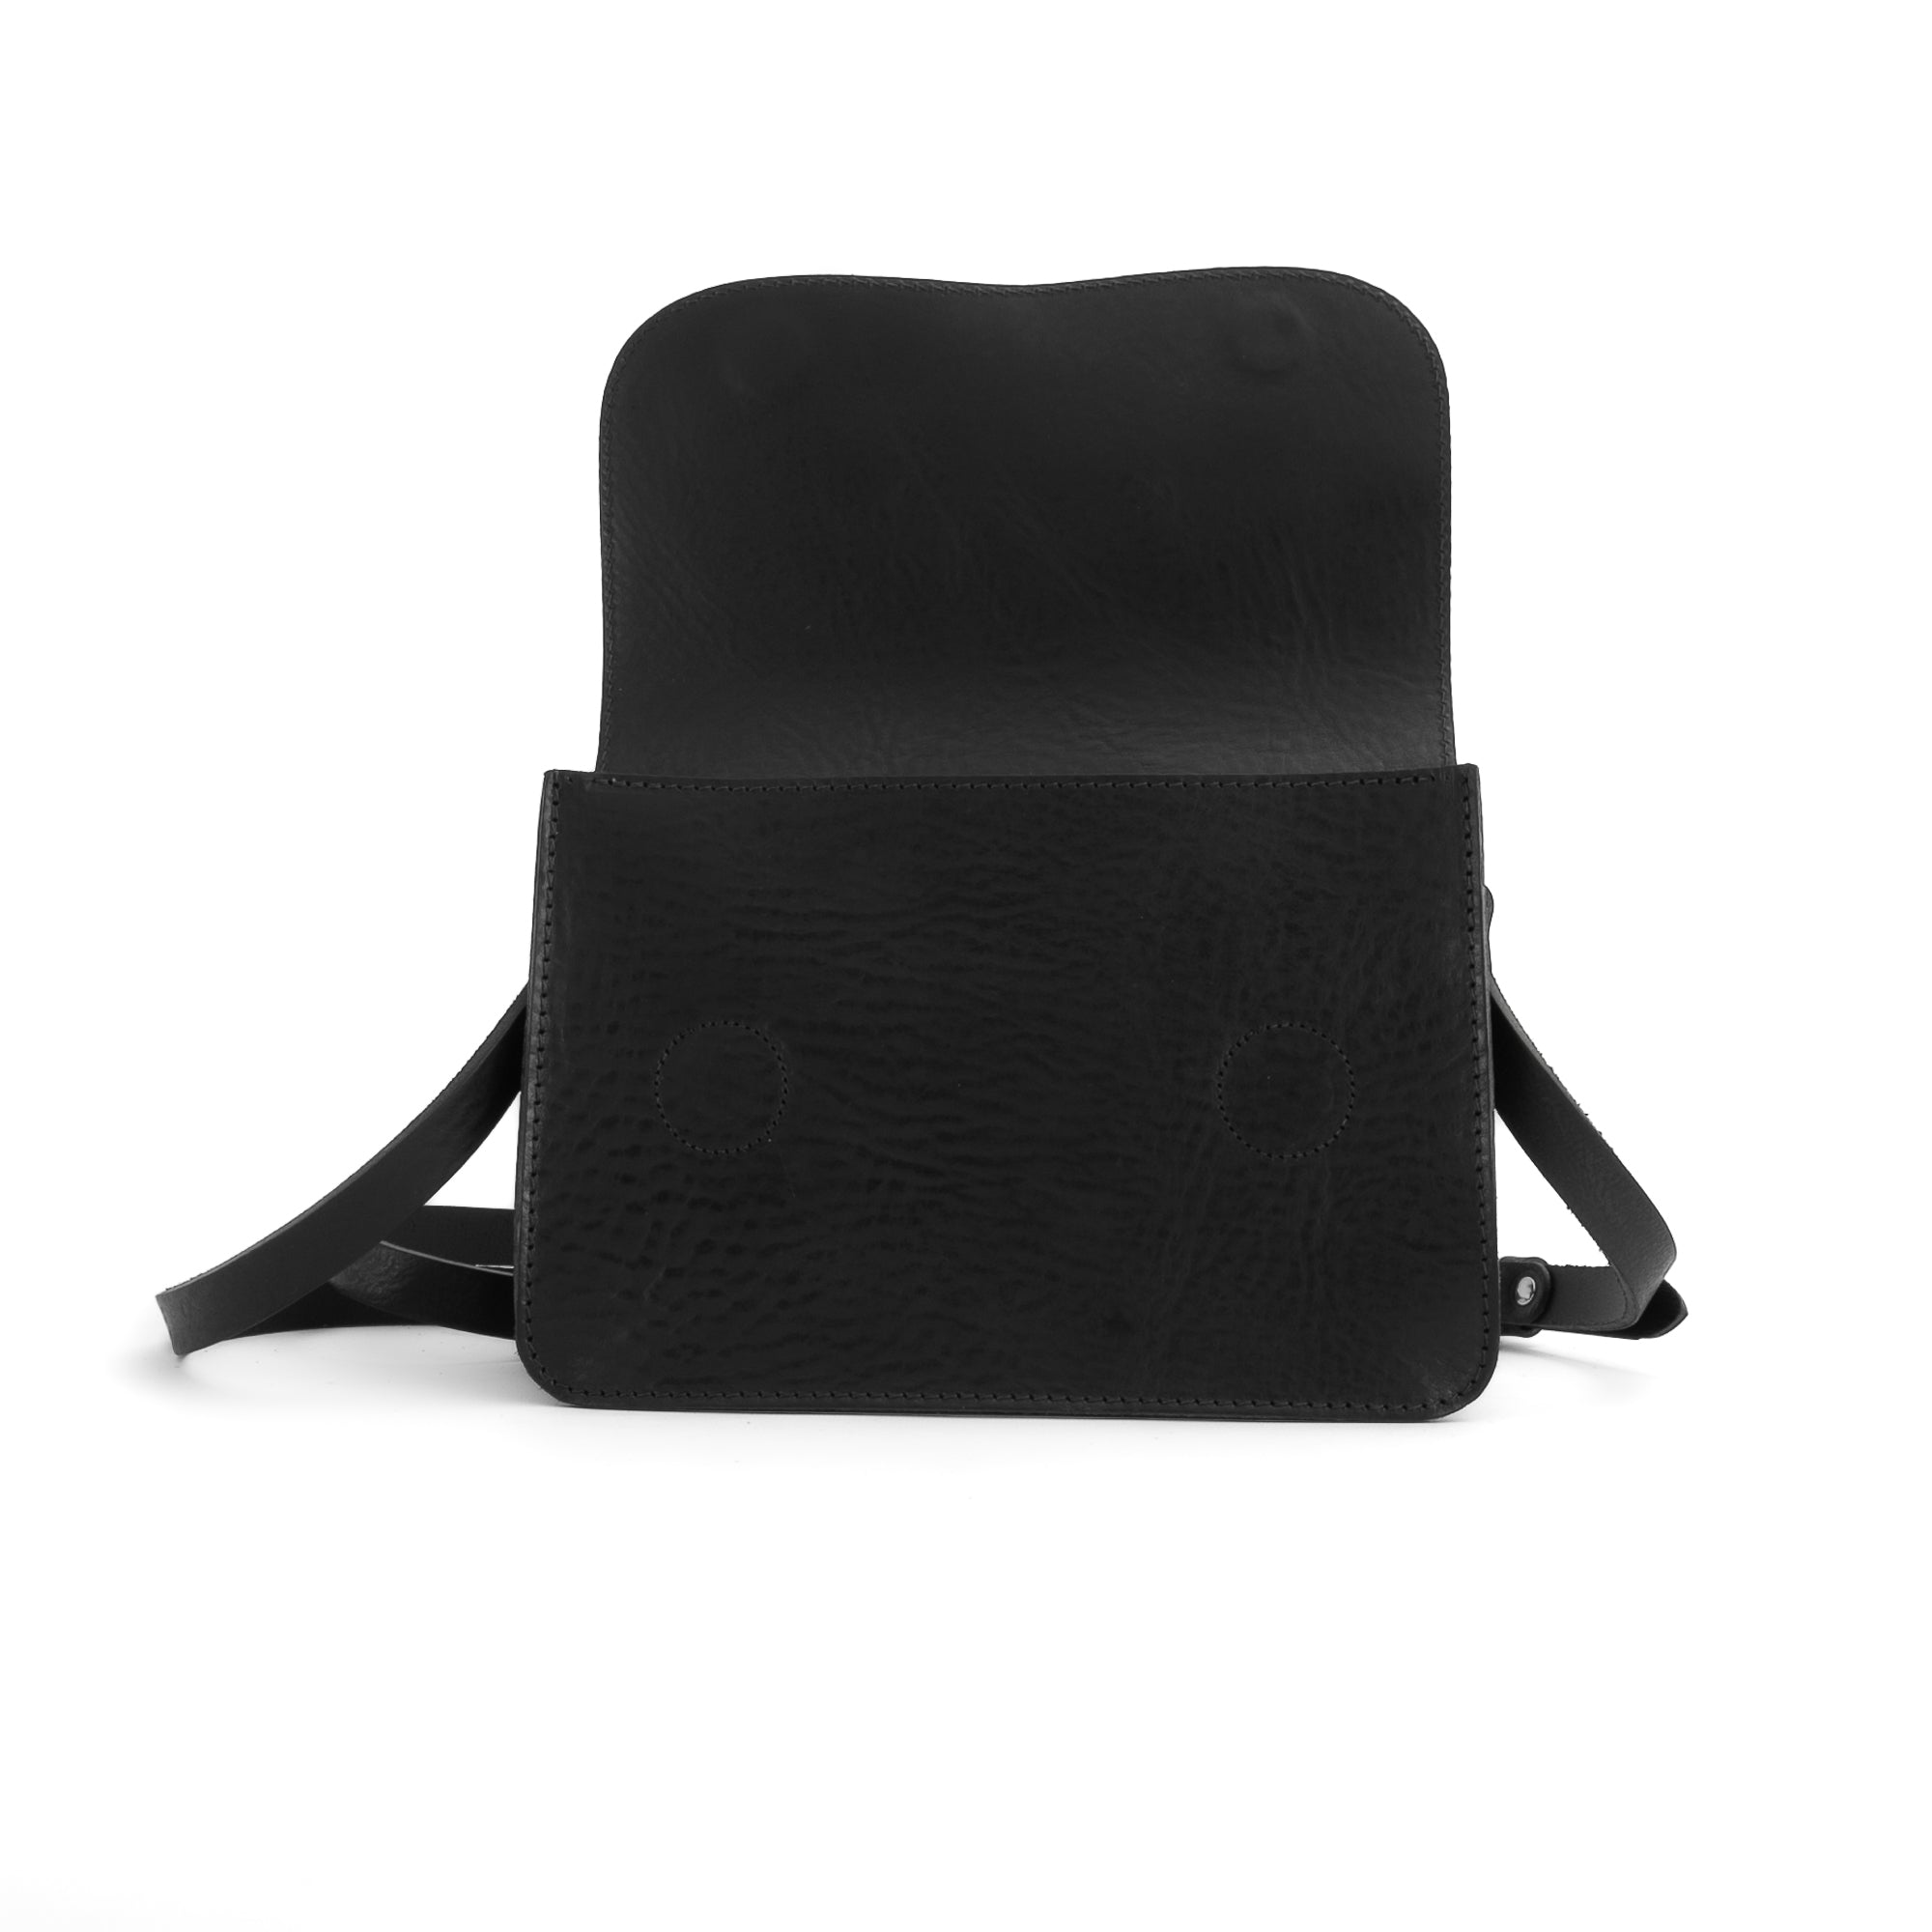 Vic - Missouri Black Leather Bag